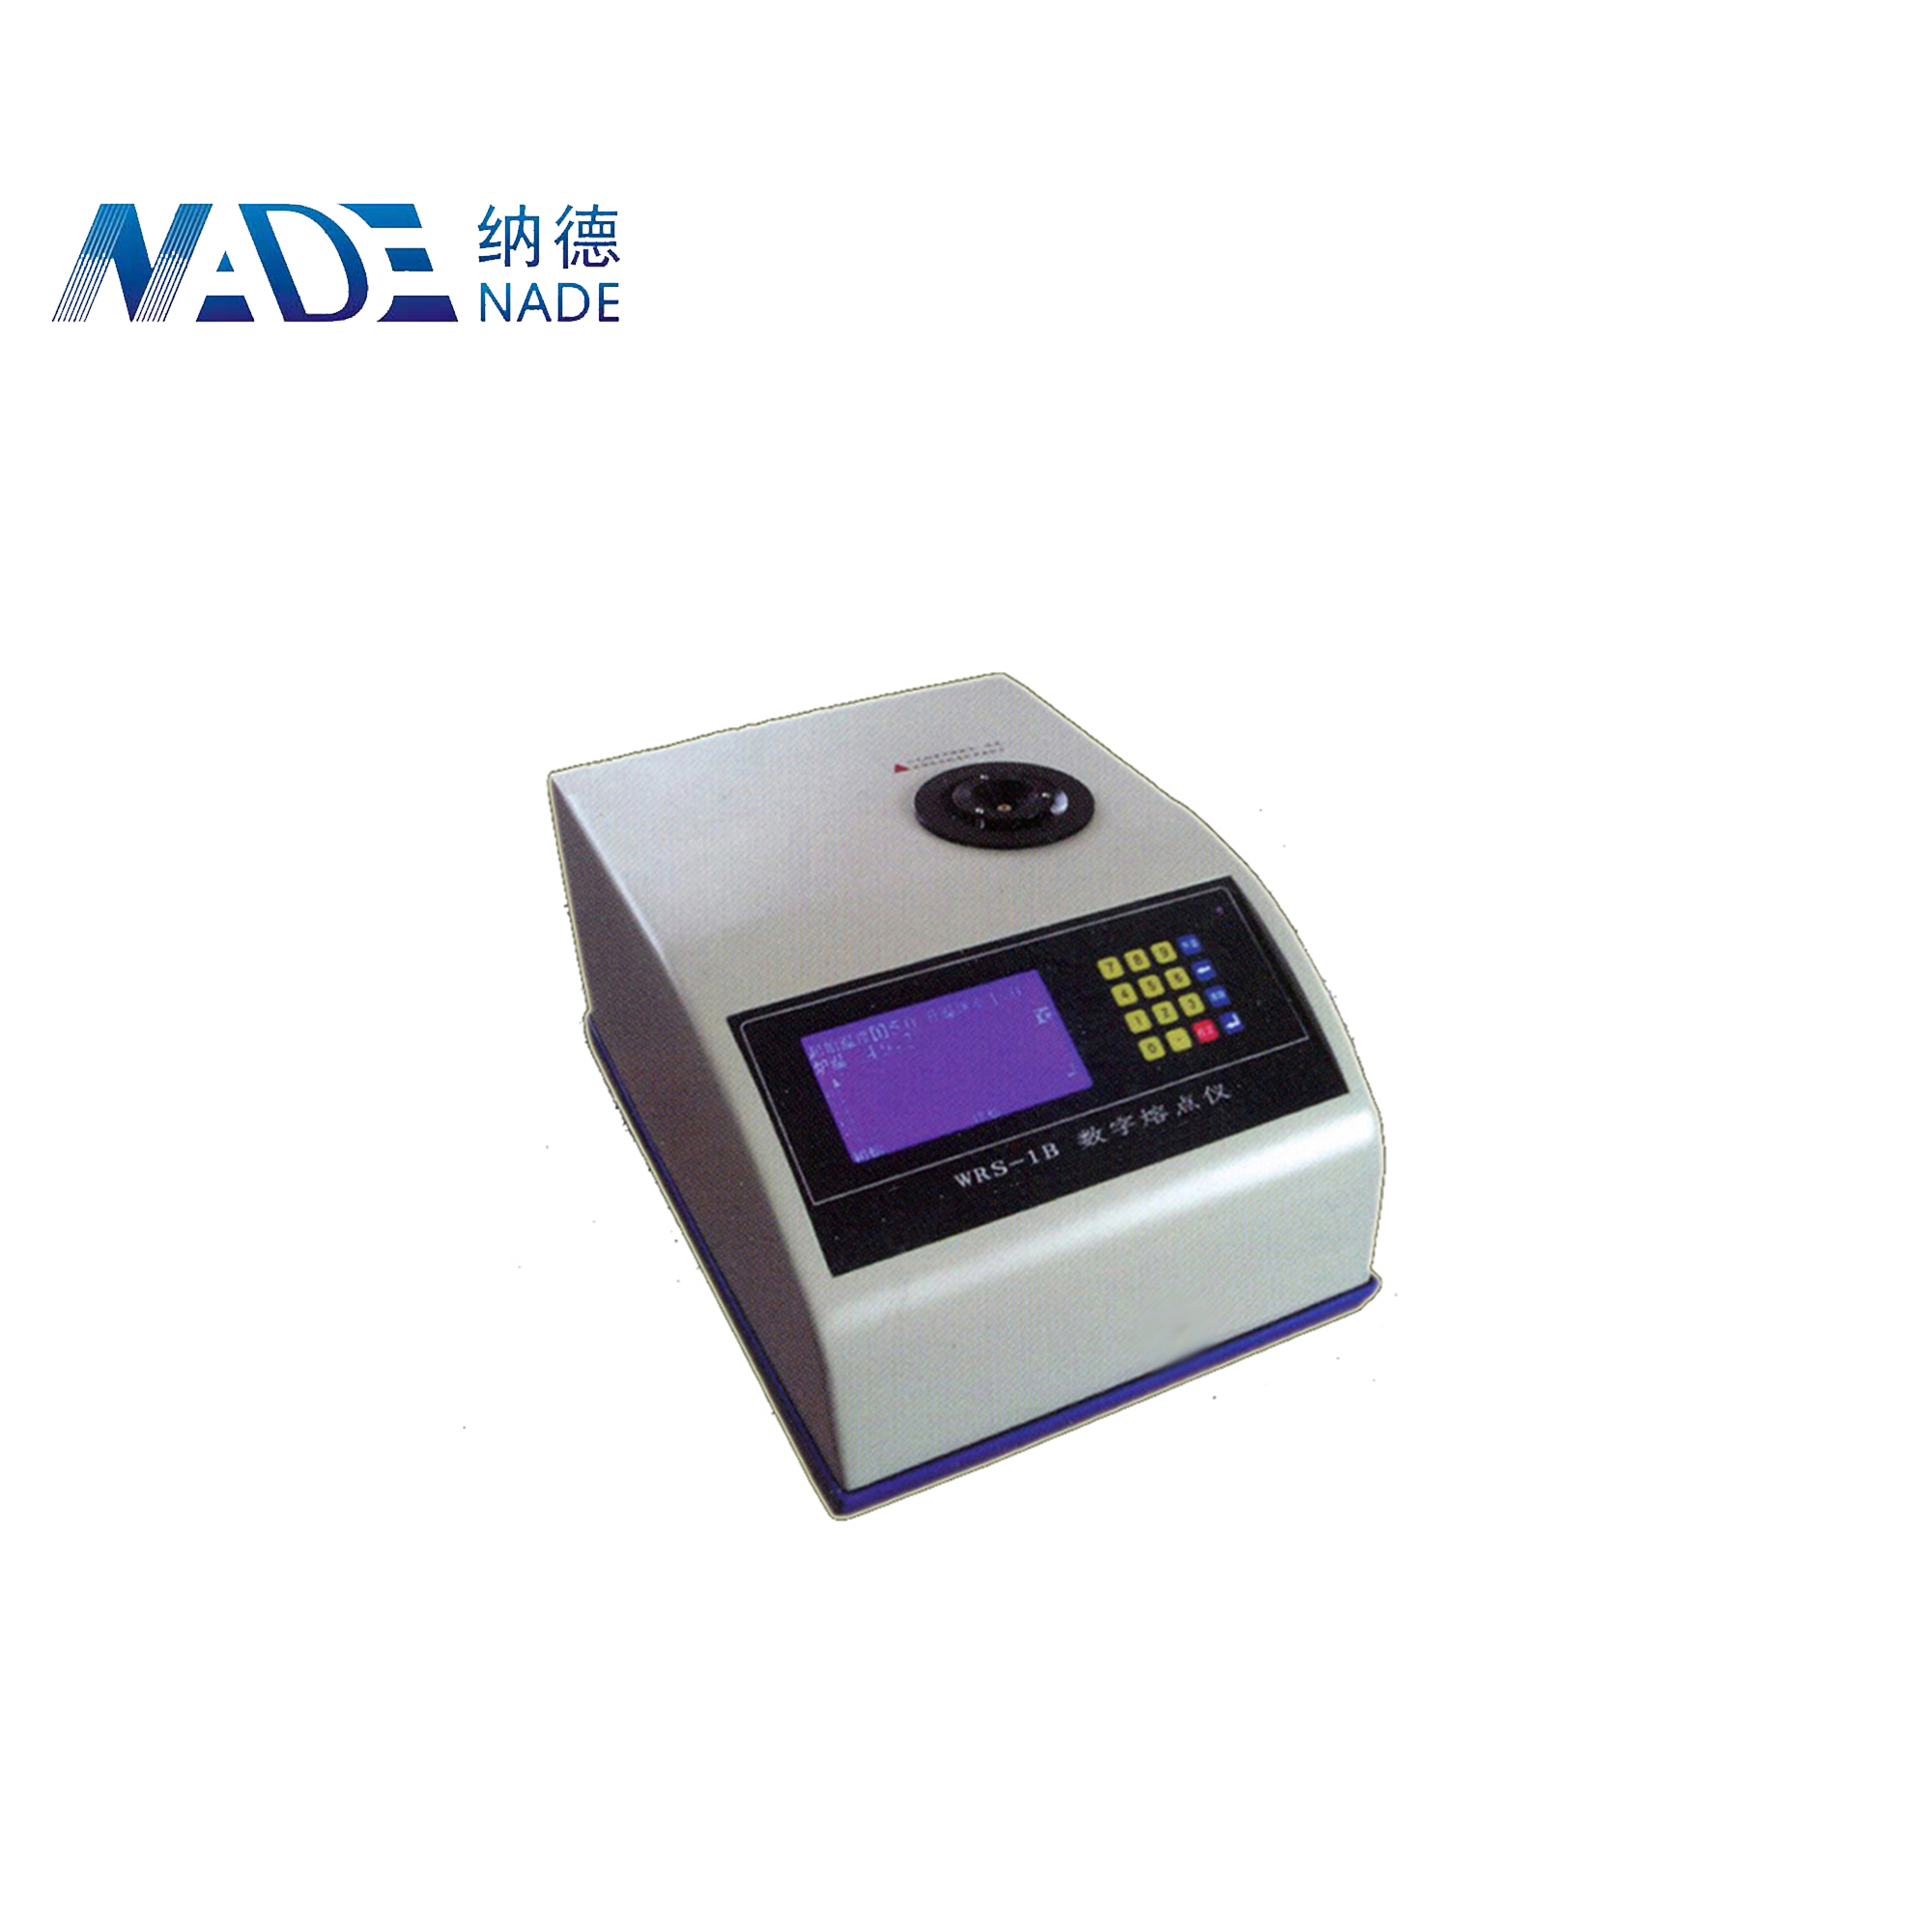 NADE WRS-1C laboratory Microprocessor melting point instrument/apparatus Room temp -400C